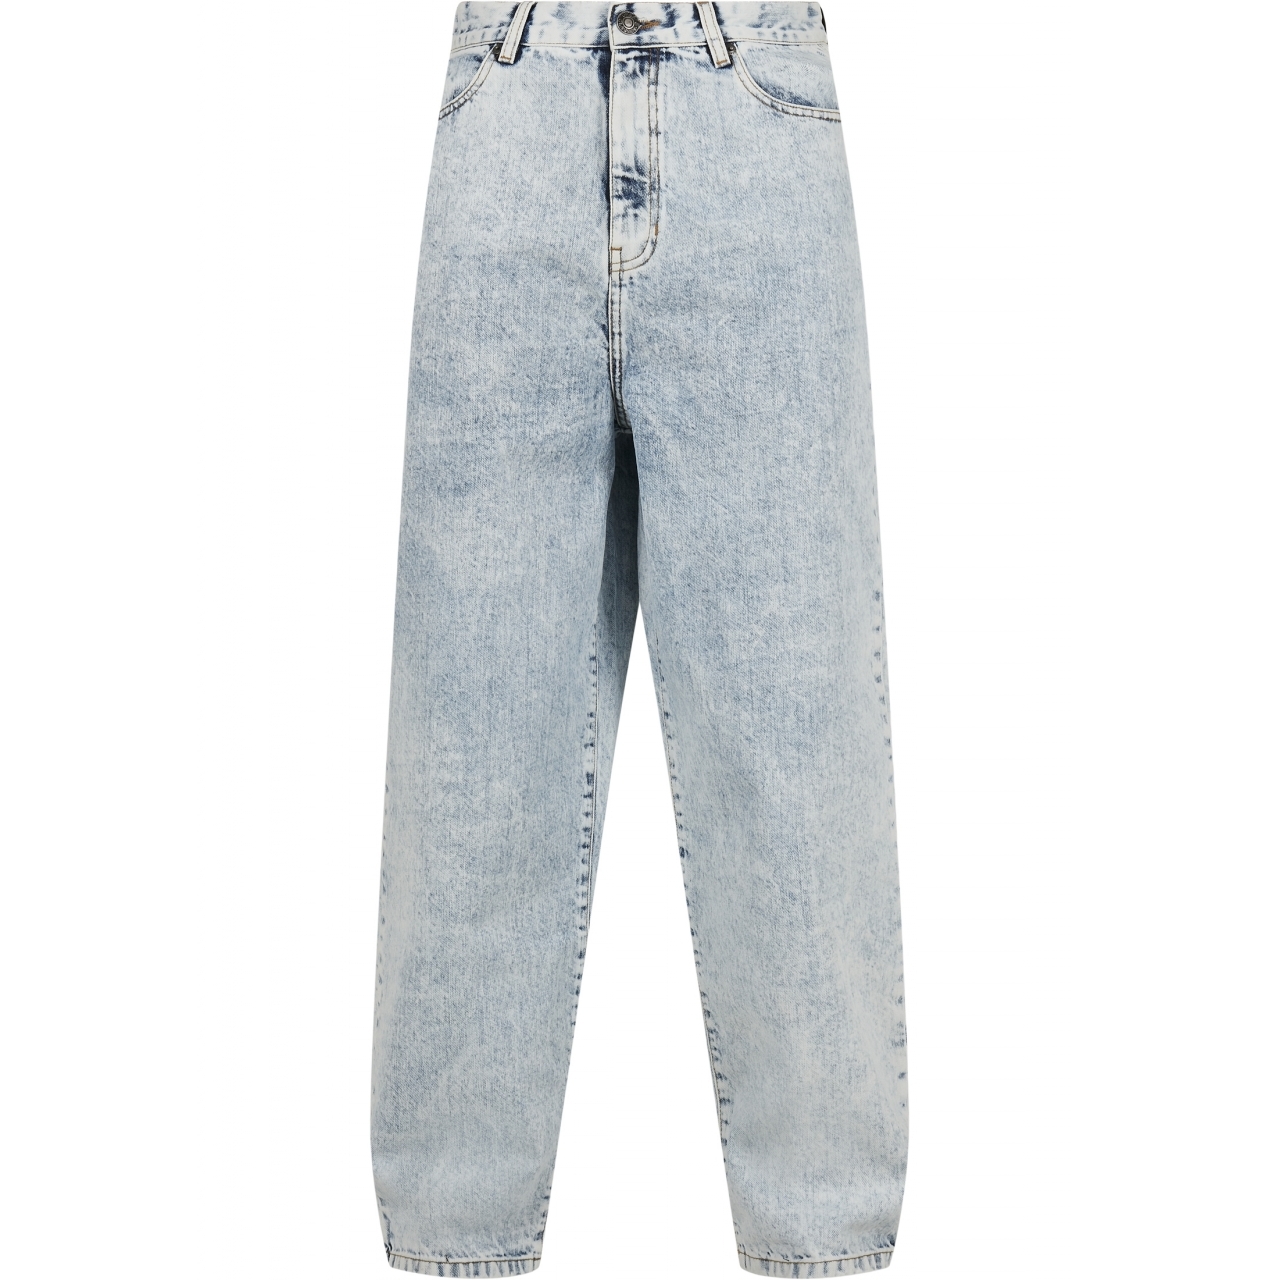 Džíny Urban Classics 90s Jeans - modré, 30